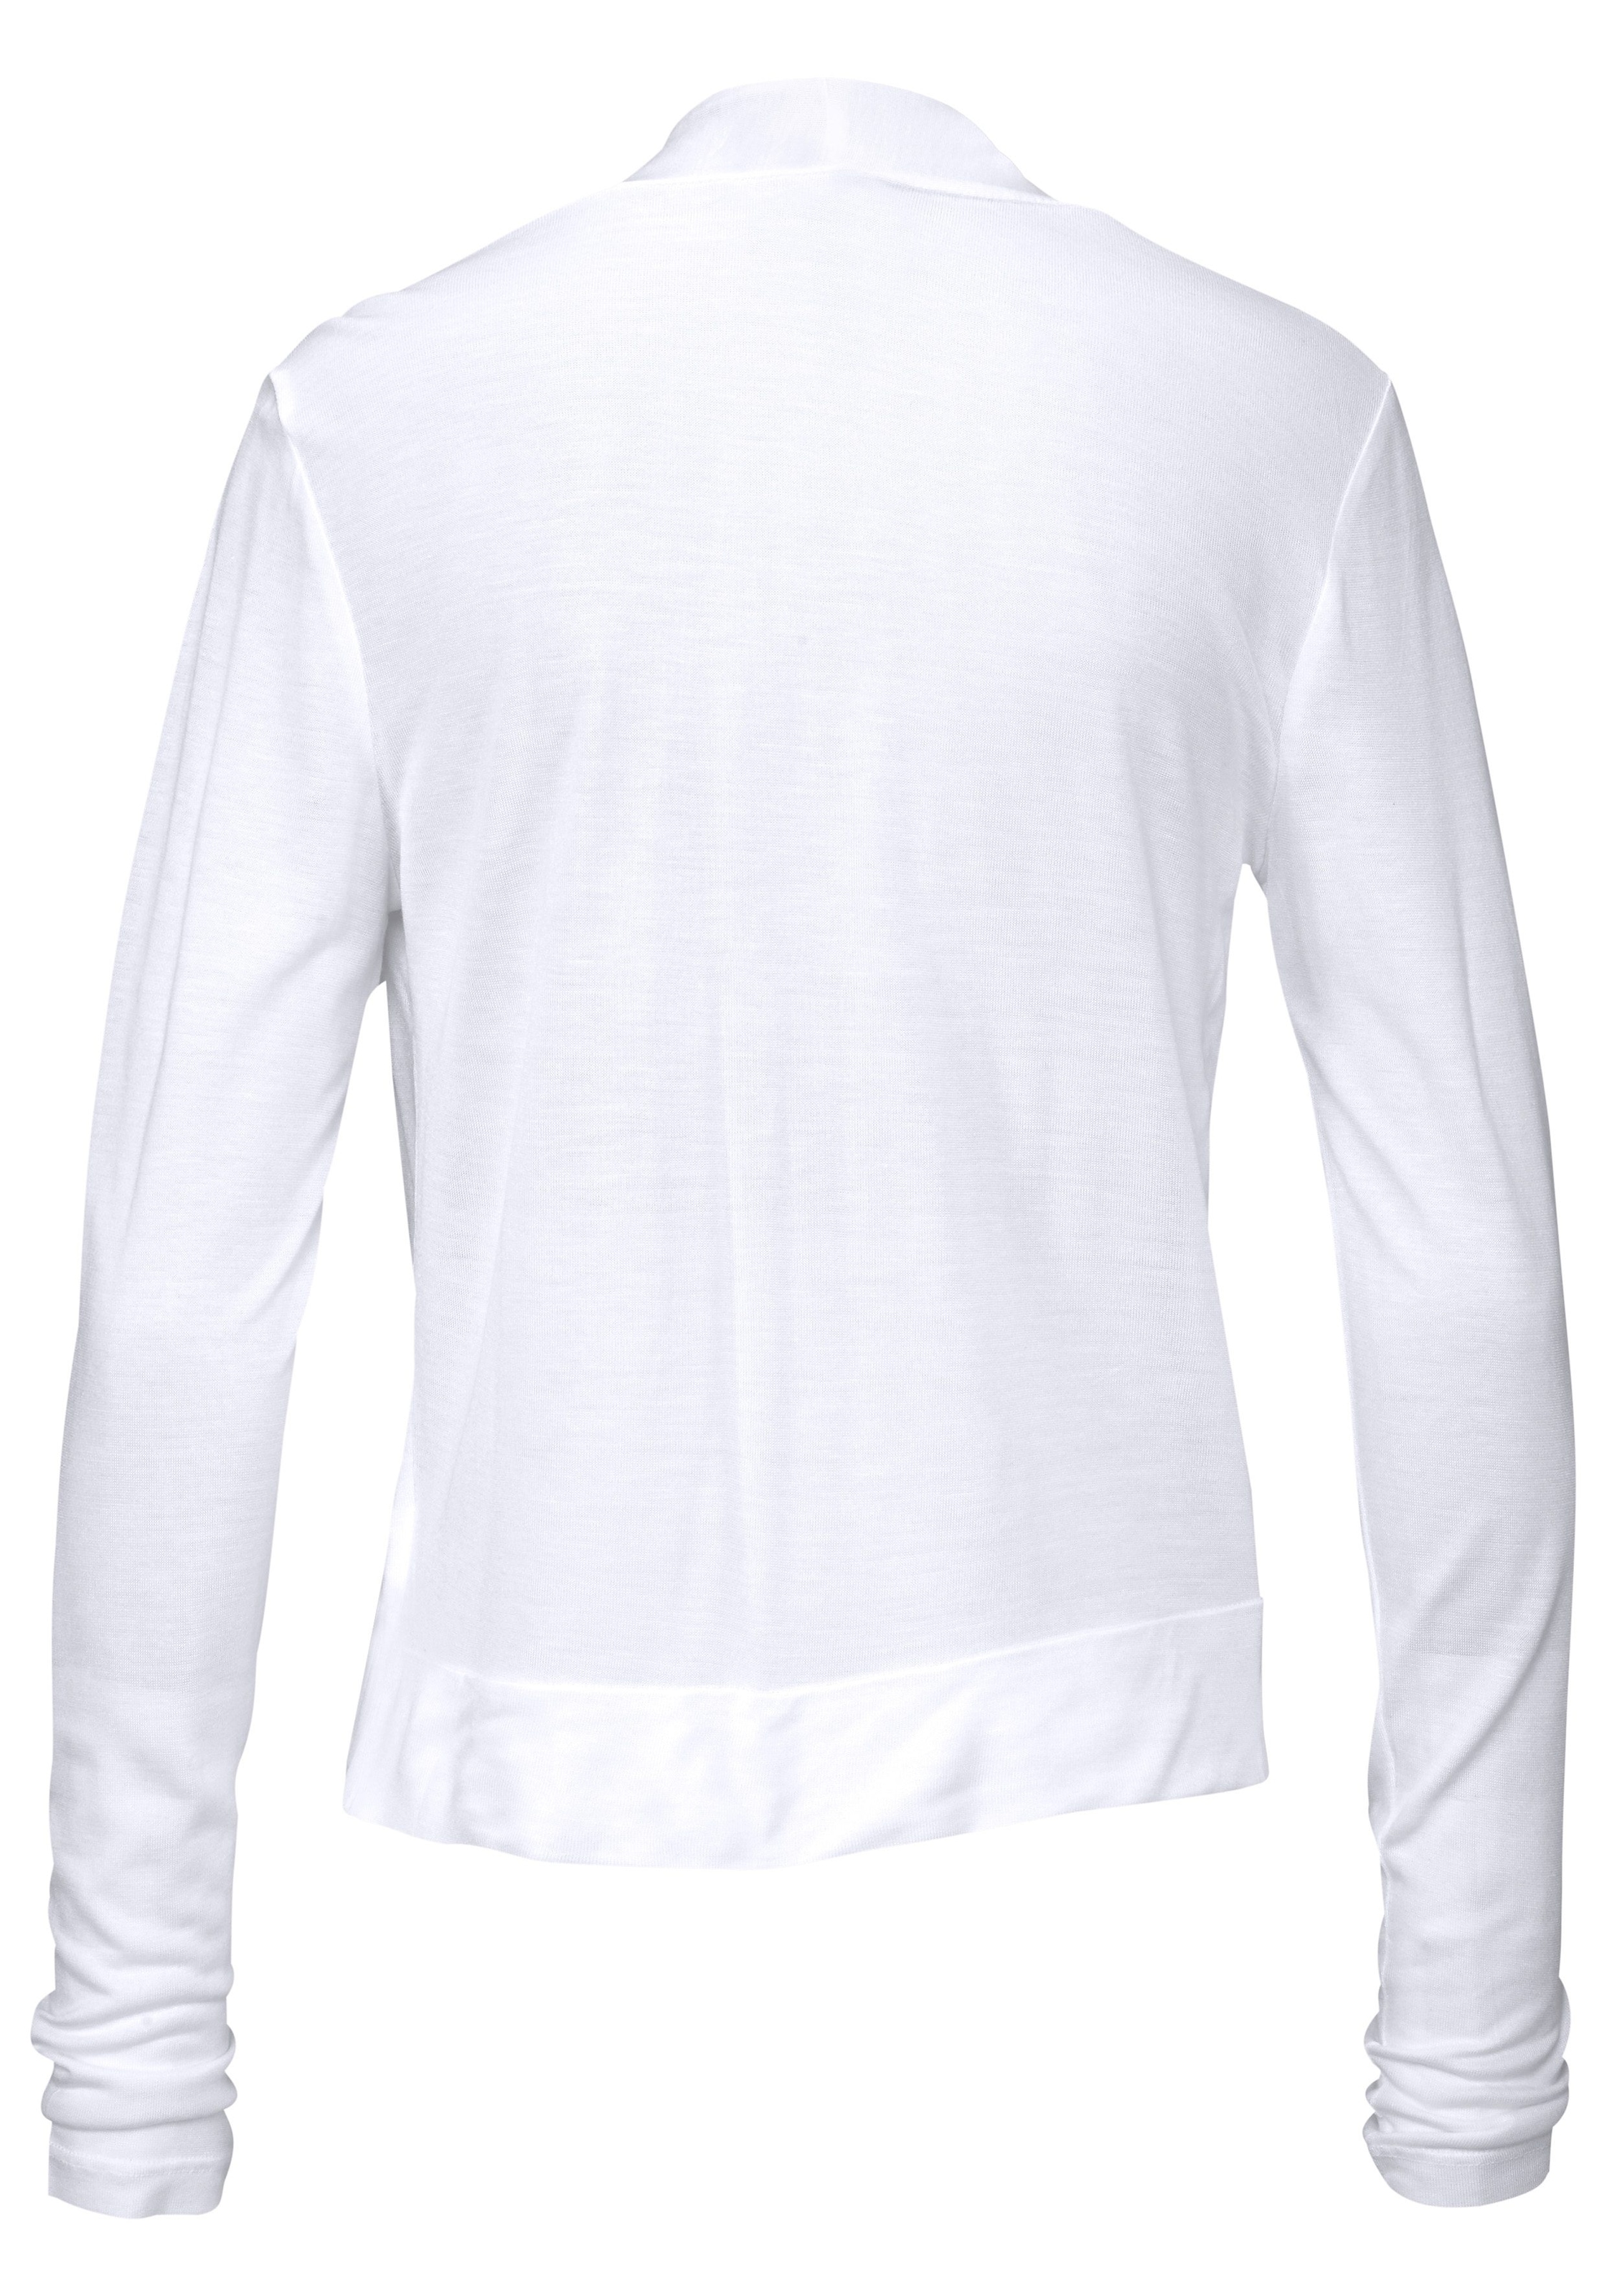 LASCANA Shirtjacke, in offener Cardigan aus Lingerie Bademode, Sommerjacke, Jersey, online Strickjacke | Unterwäsche Form, LASCANA kaufen & »